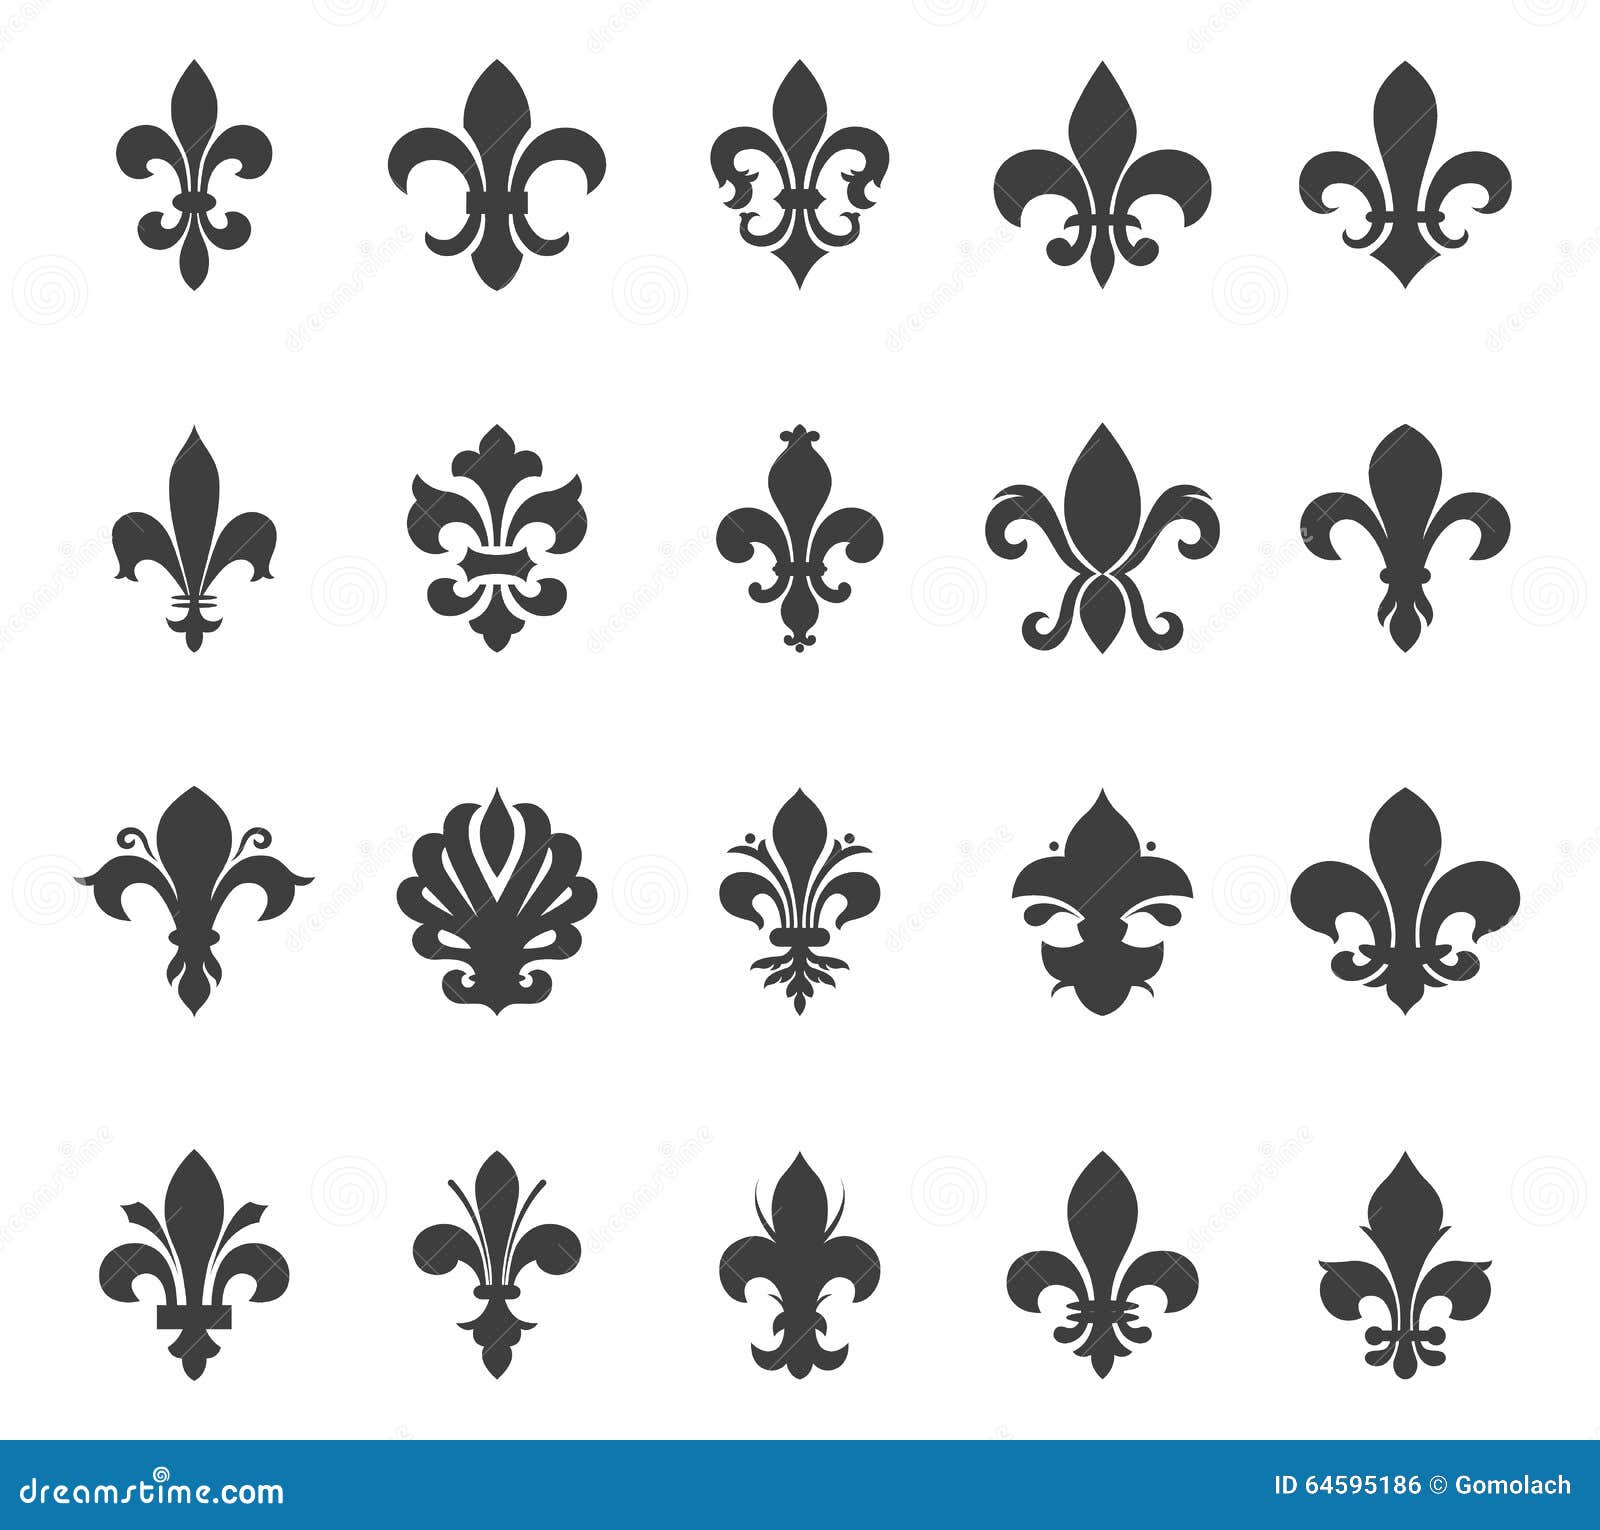 Fleur de lis set stock vector. Illustration of pattern - 64595186